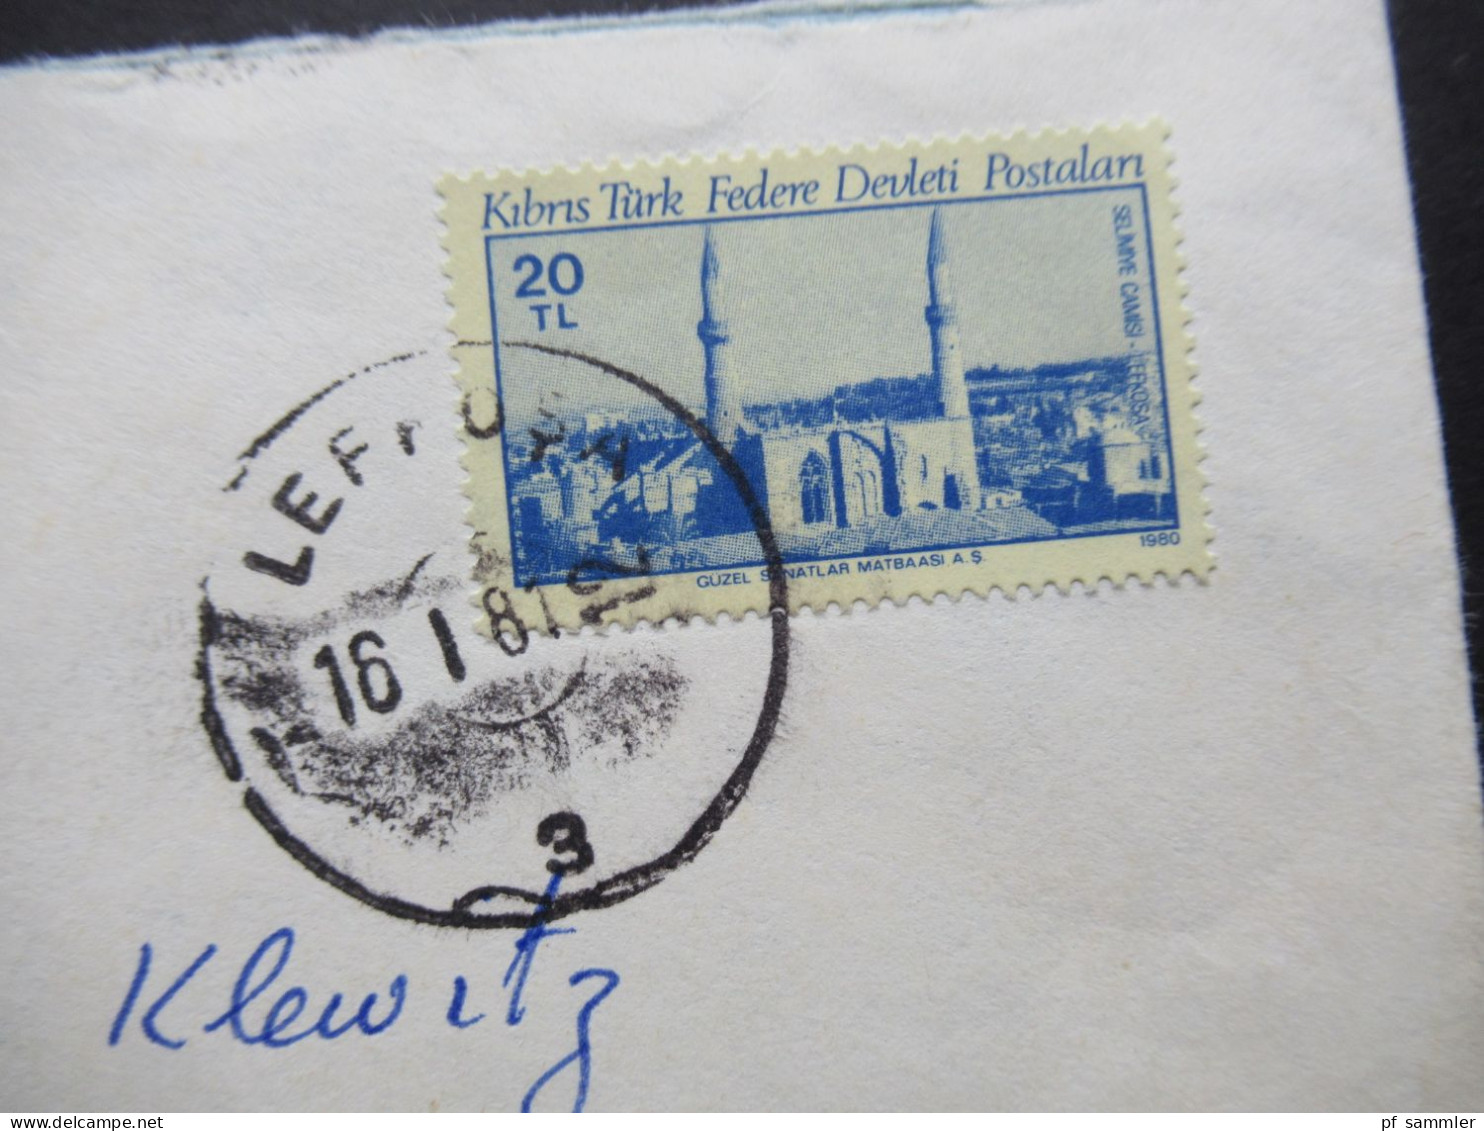 Zypern 1981 Kibris Türk Federe Devleti Postalan Stempel Lefkosa Nach Fulda Gesendet - Covers & Documents